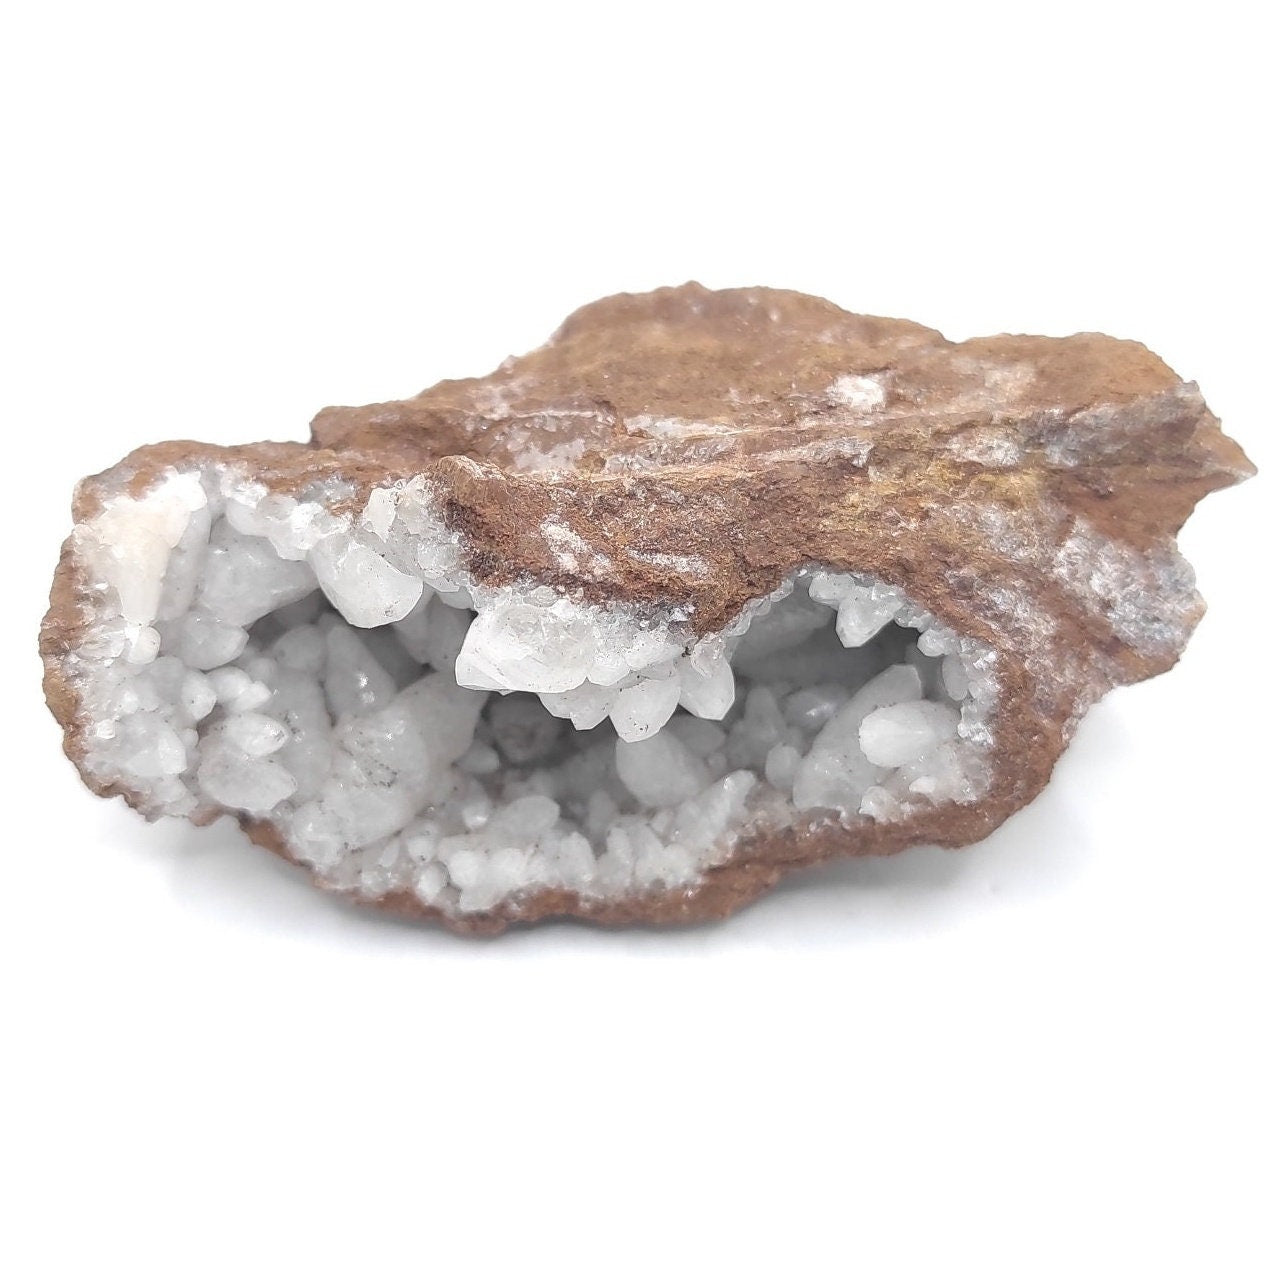 38g UV Reactive Calcite - Phosphorescent Calcite Specimen - Cambridge Cove, Nova Scotia, Canada - UV Minerals - Minerals with Afterglow